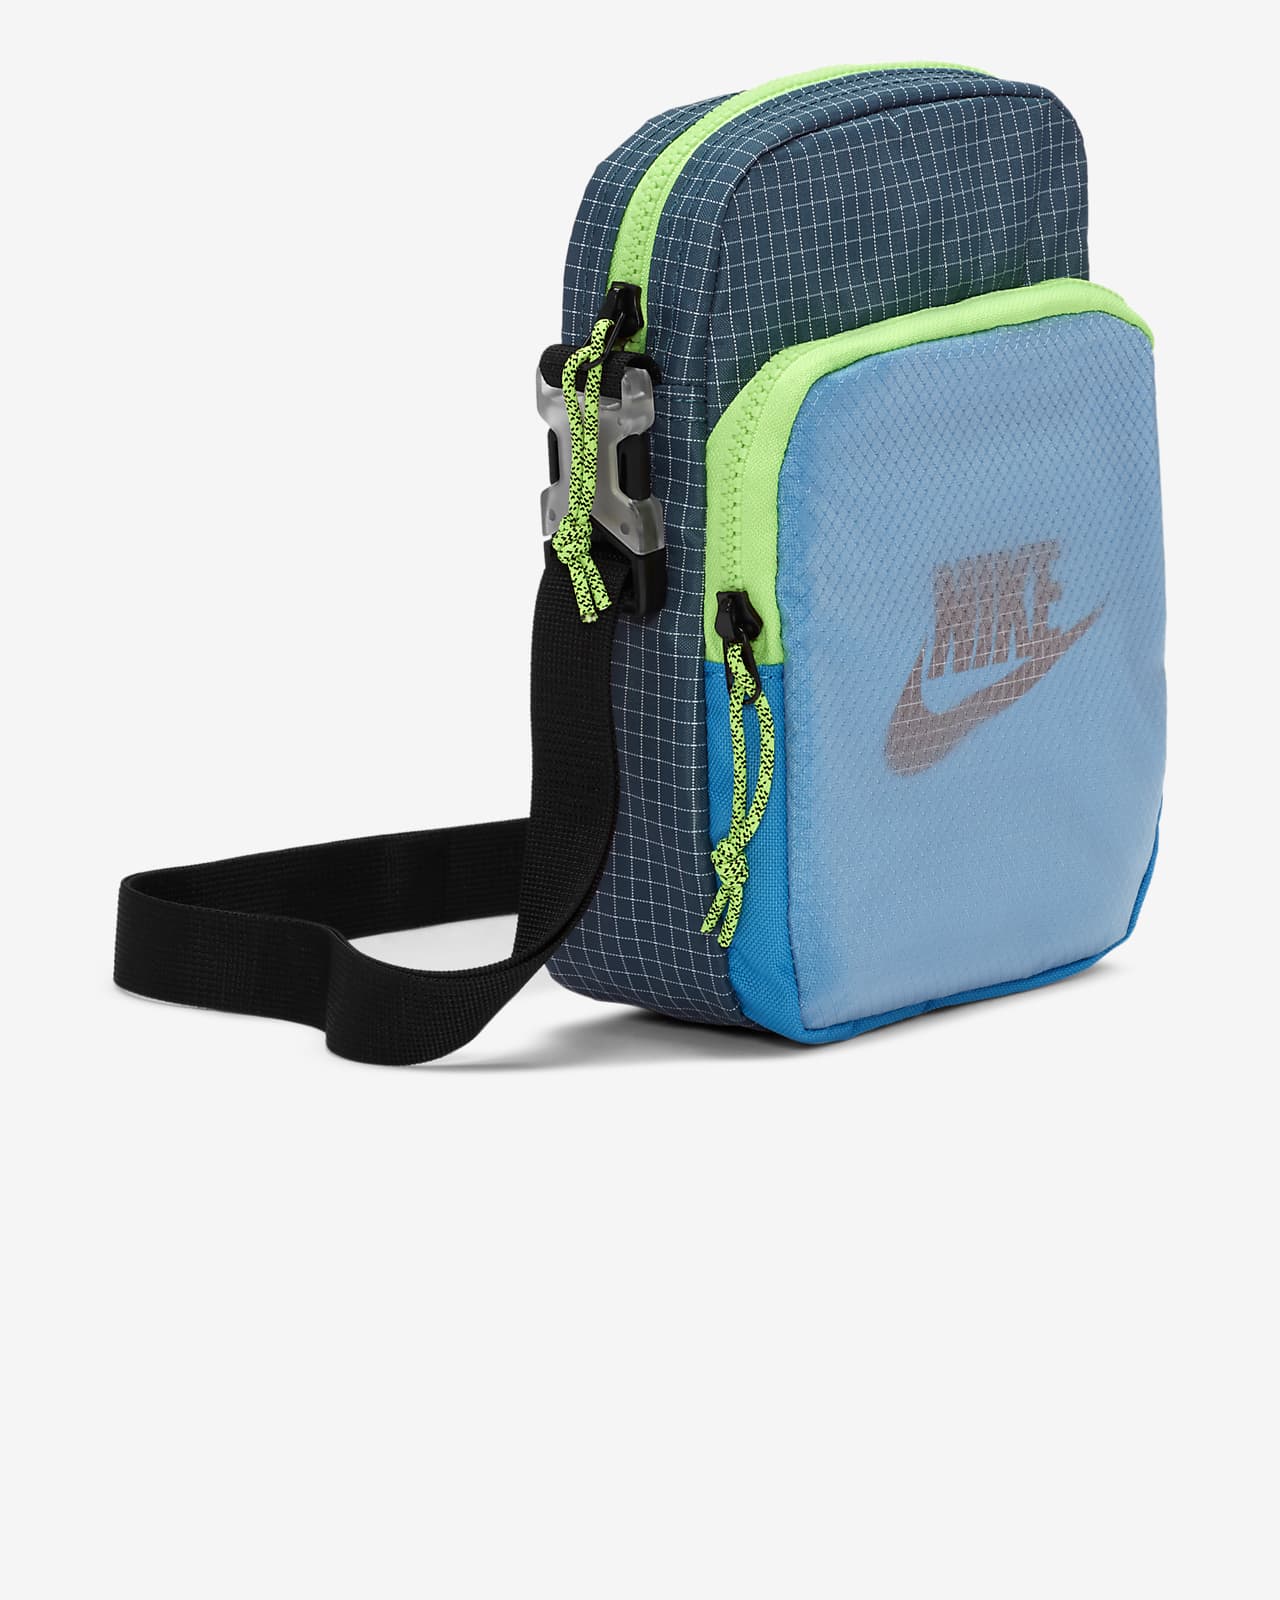 nike heritage backpack 2.0